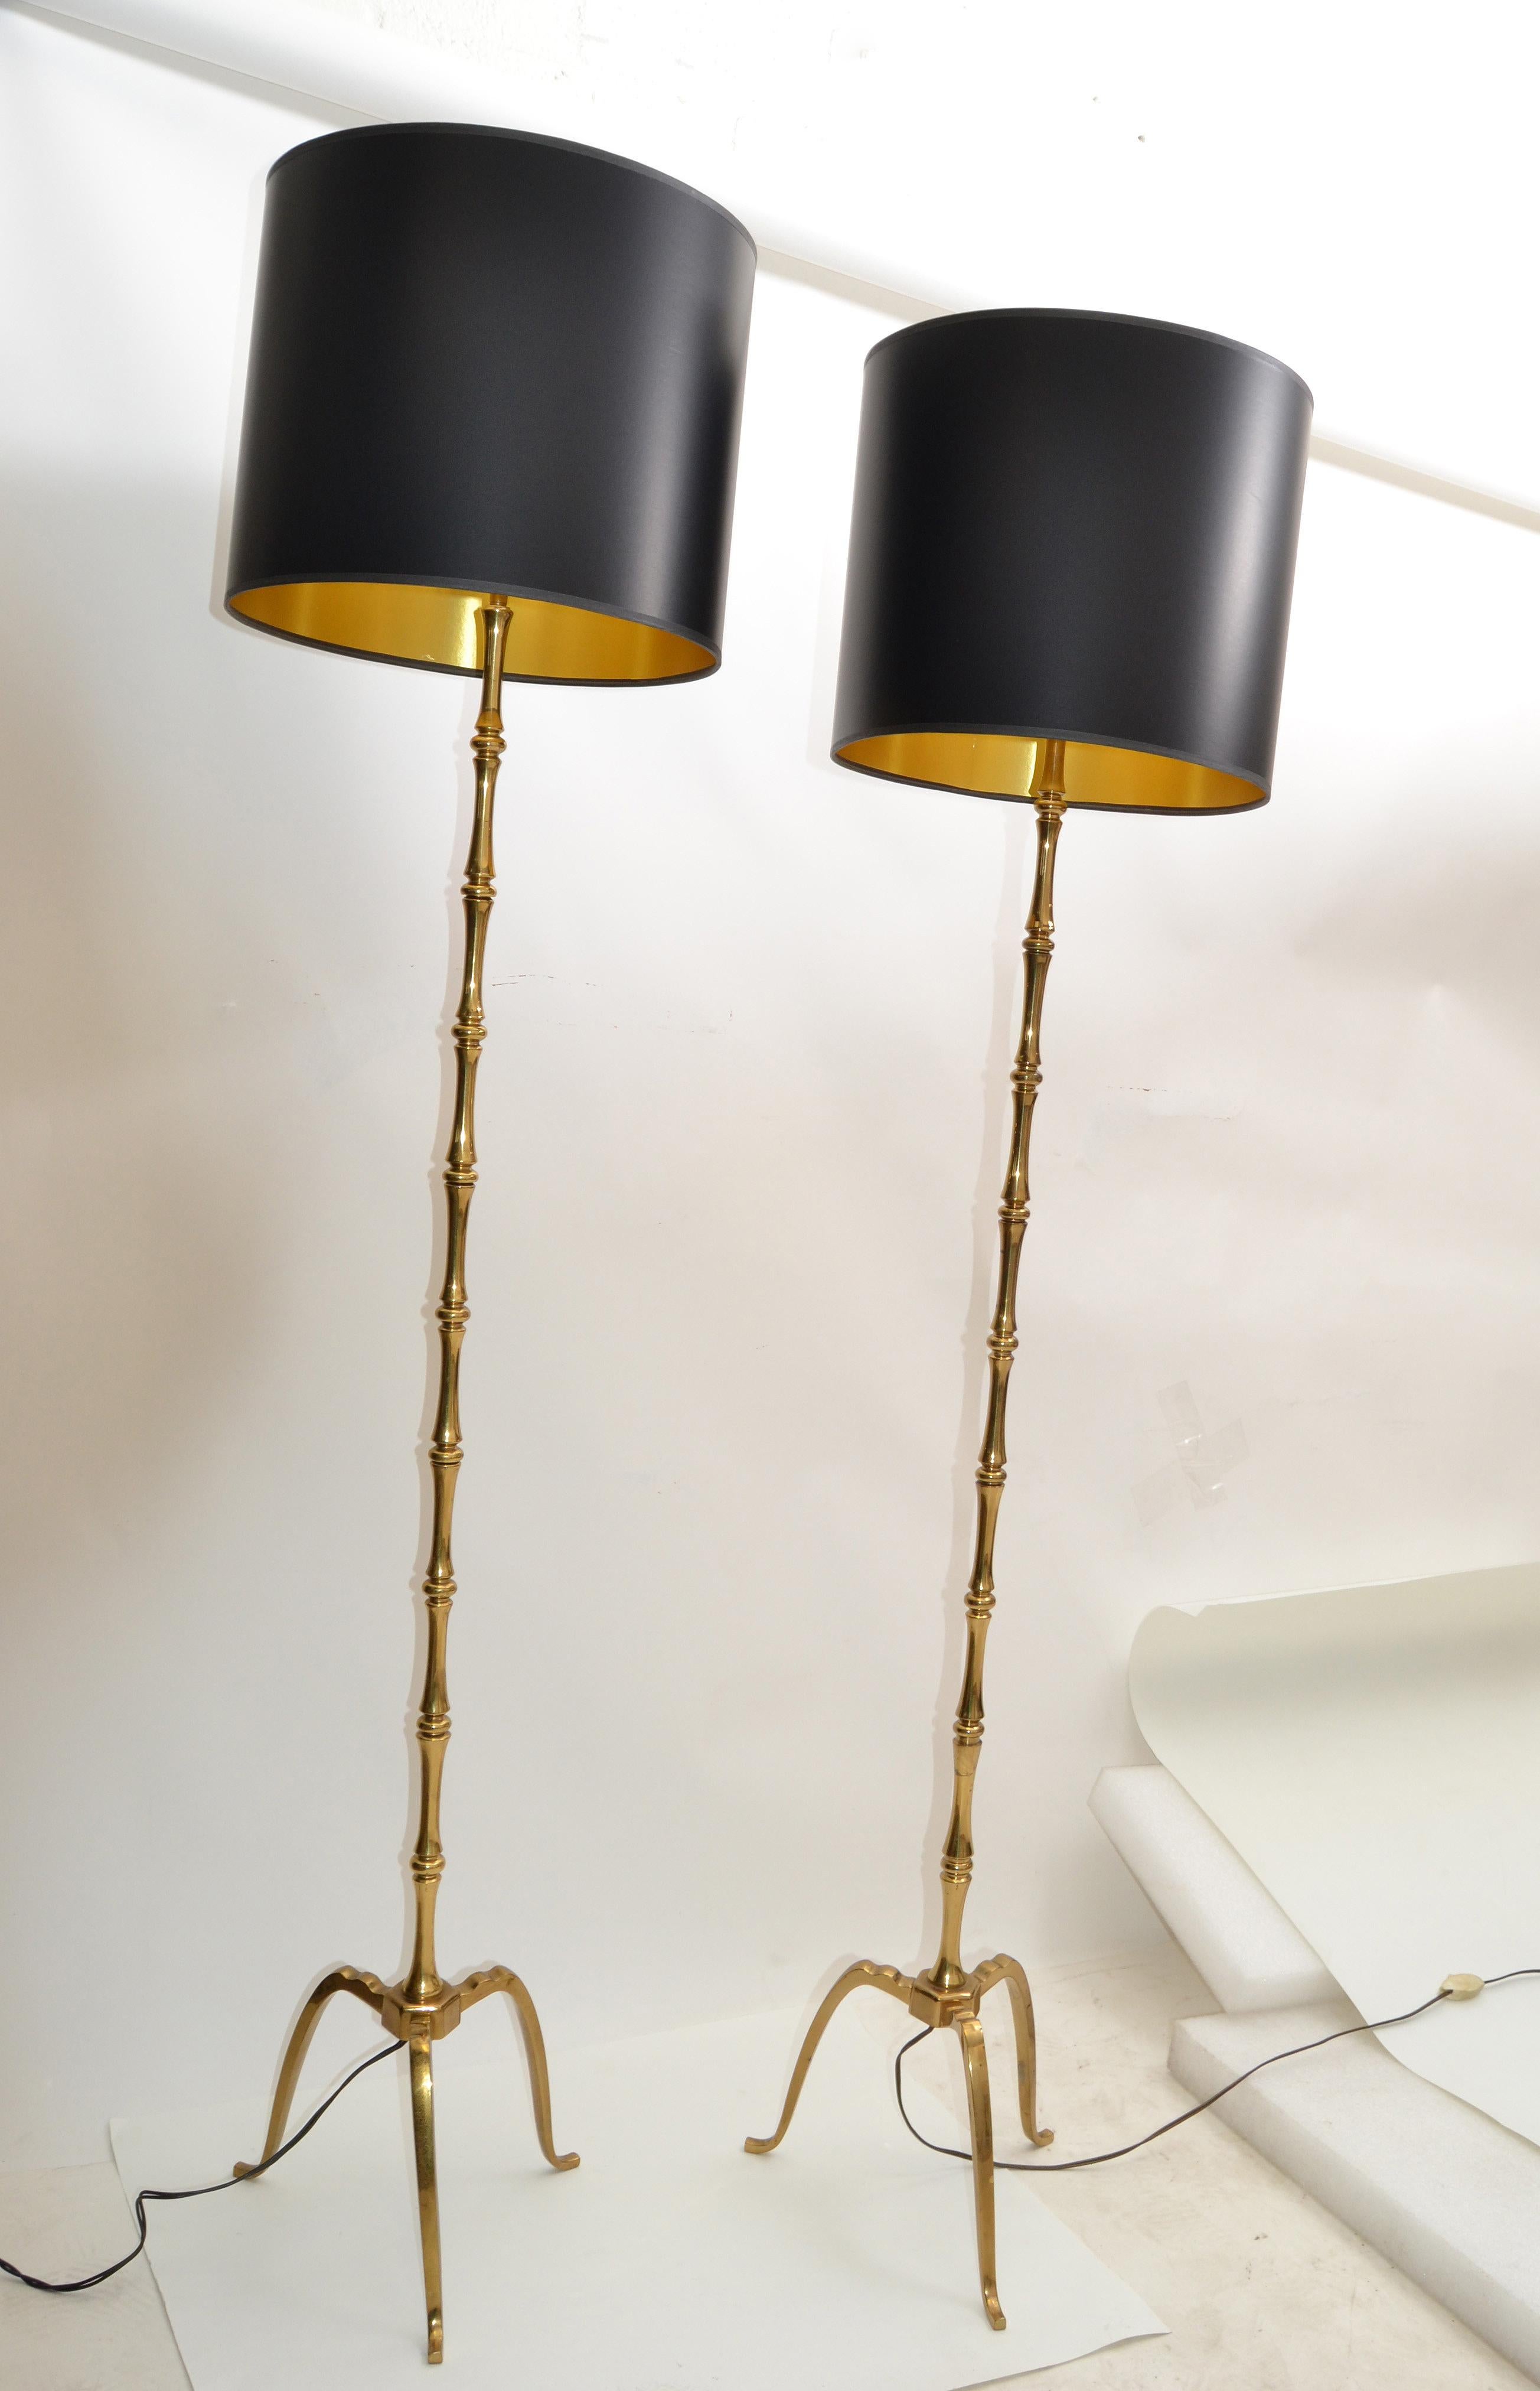 Maison Baguès Brass Mid-Century Modern Floor Lamp France 1950 Black Shade, Pair For Sale 3